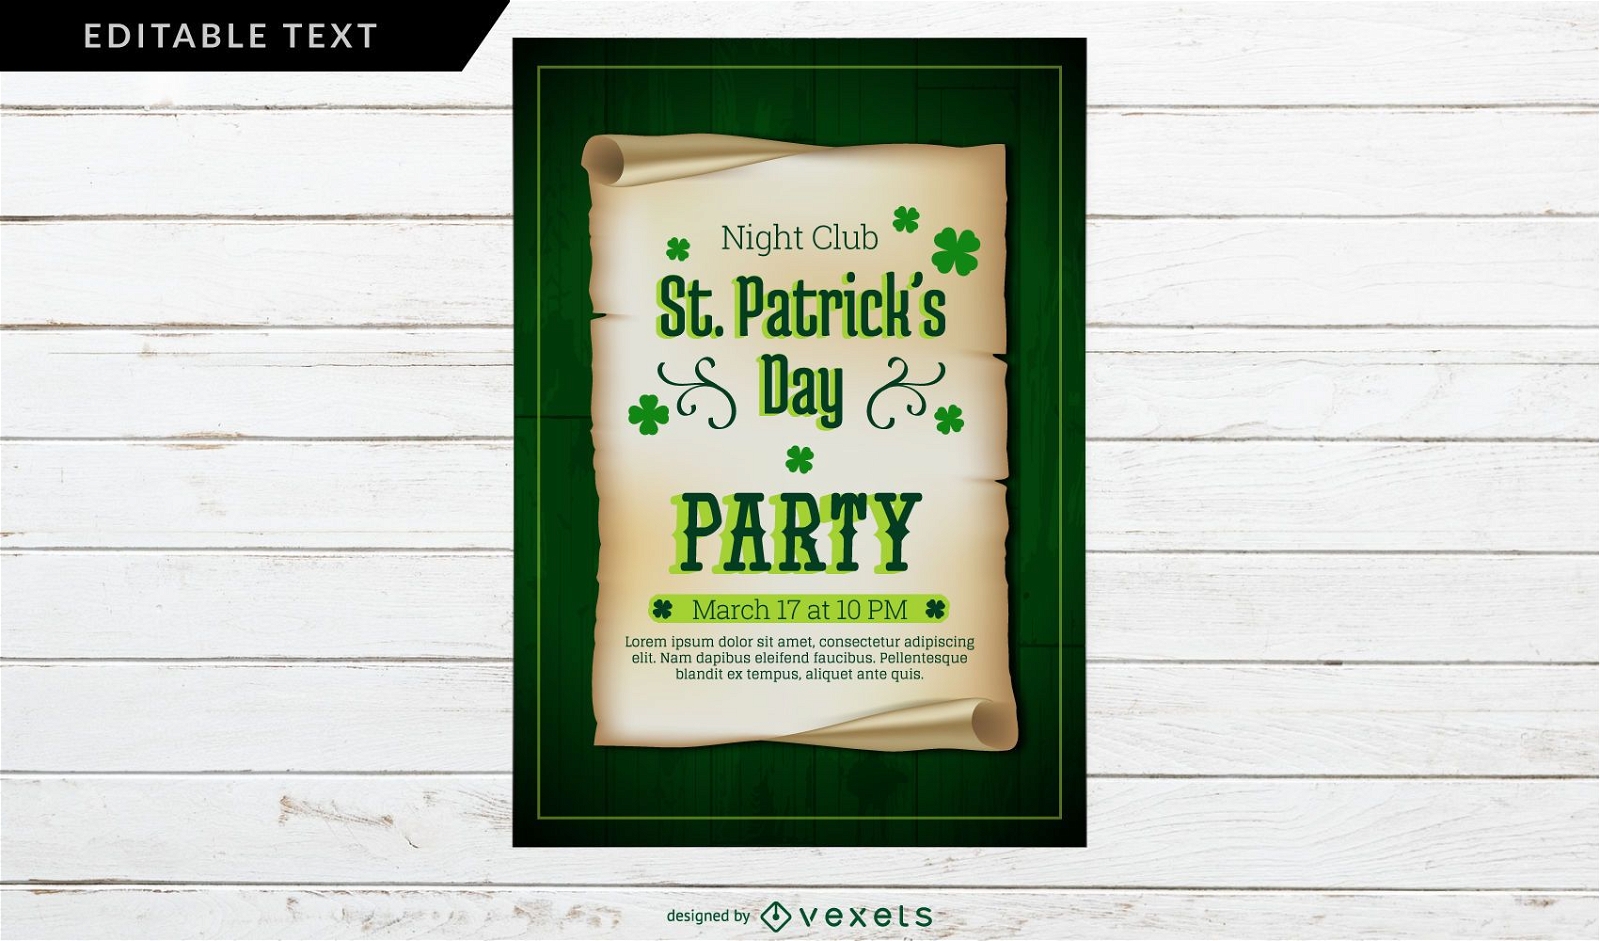 Saint Patrick's Day Party Poster Design